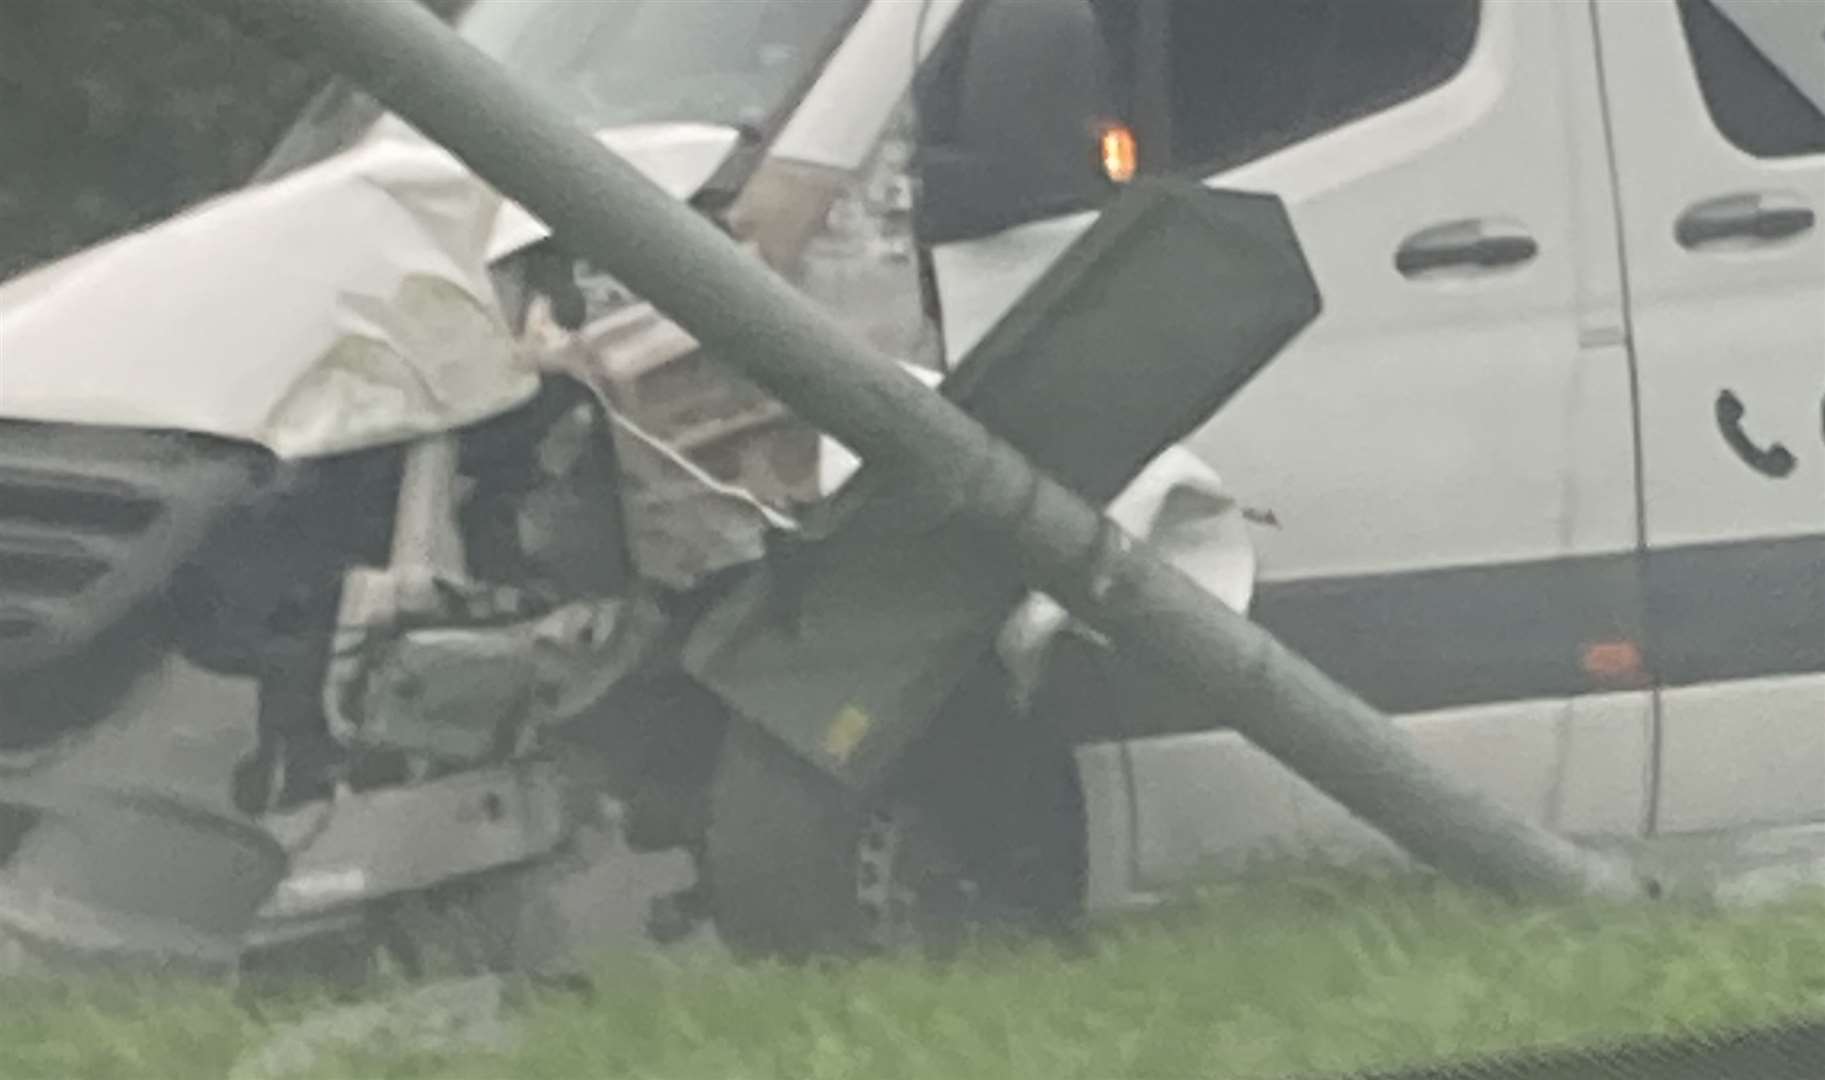 The van crashed in Hoath Way, Gillingham